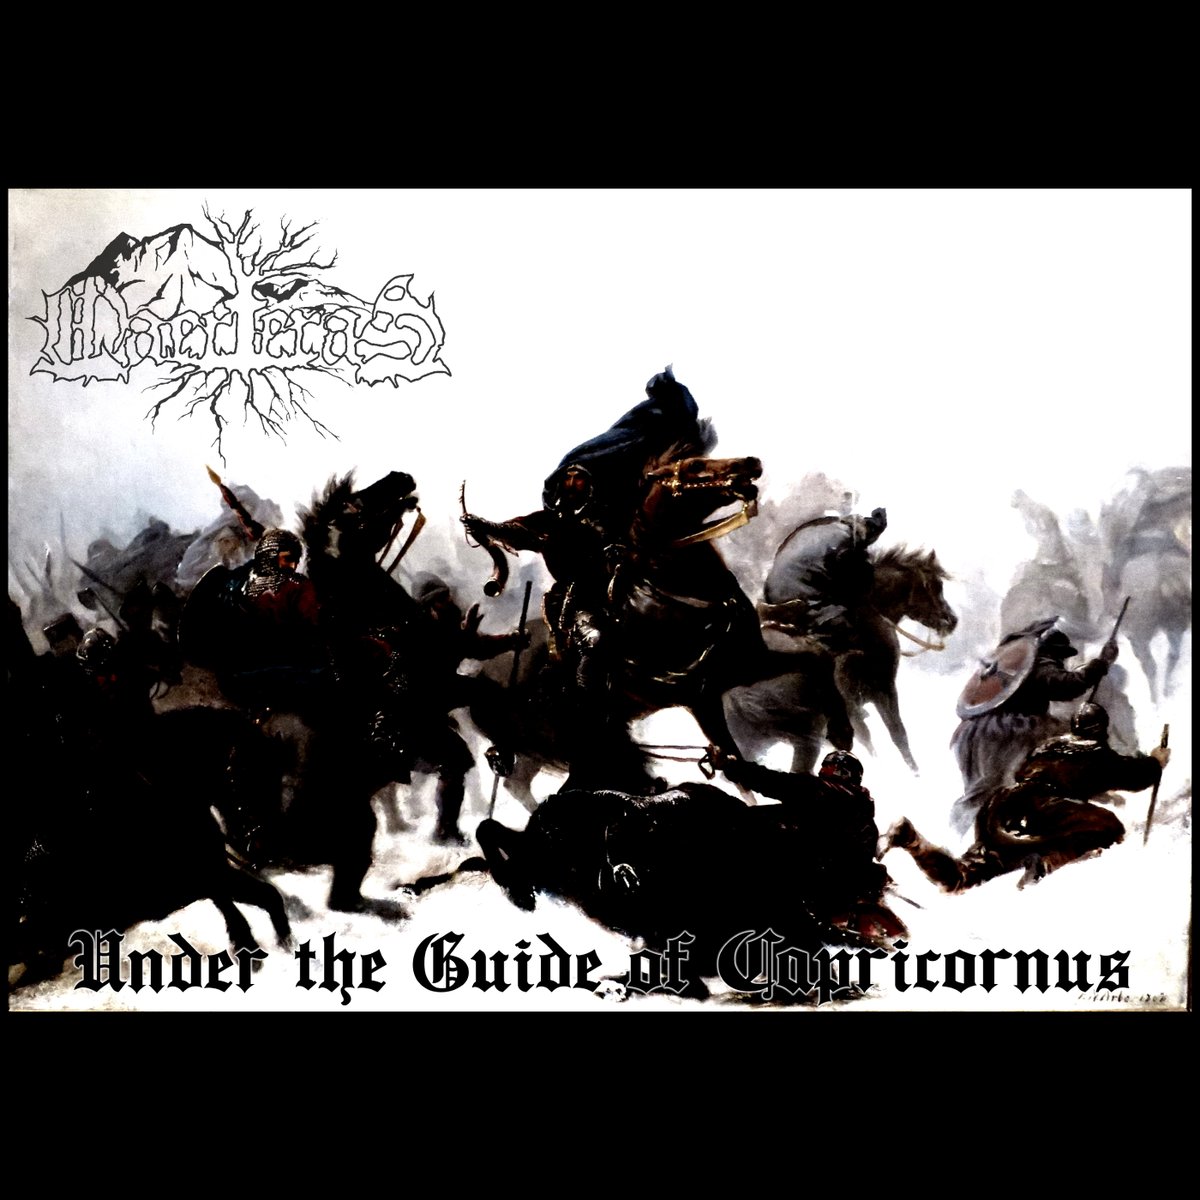 Waerteras - Under the Guide of Capricornus  (2019)
Black Metal from United Kingdom
#blackmetal #blackmetalforest #britishblackmetal #waerteras
Full Album:youtube.com/watch?v=r8-LNX…